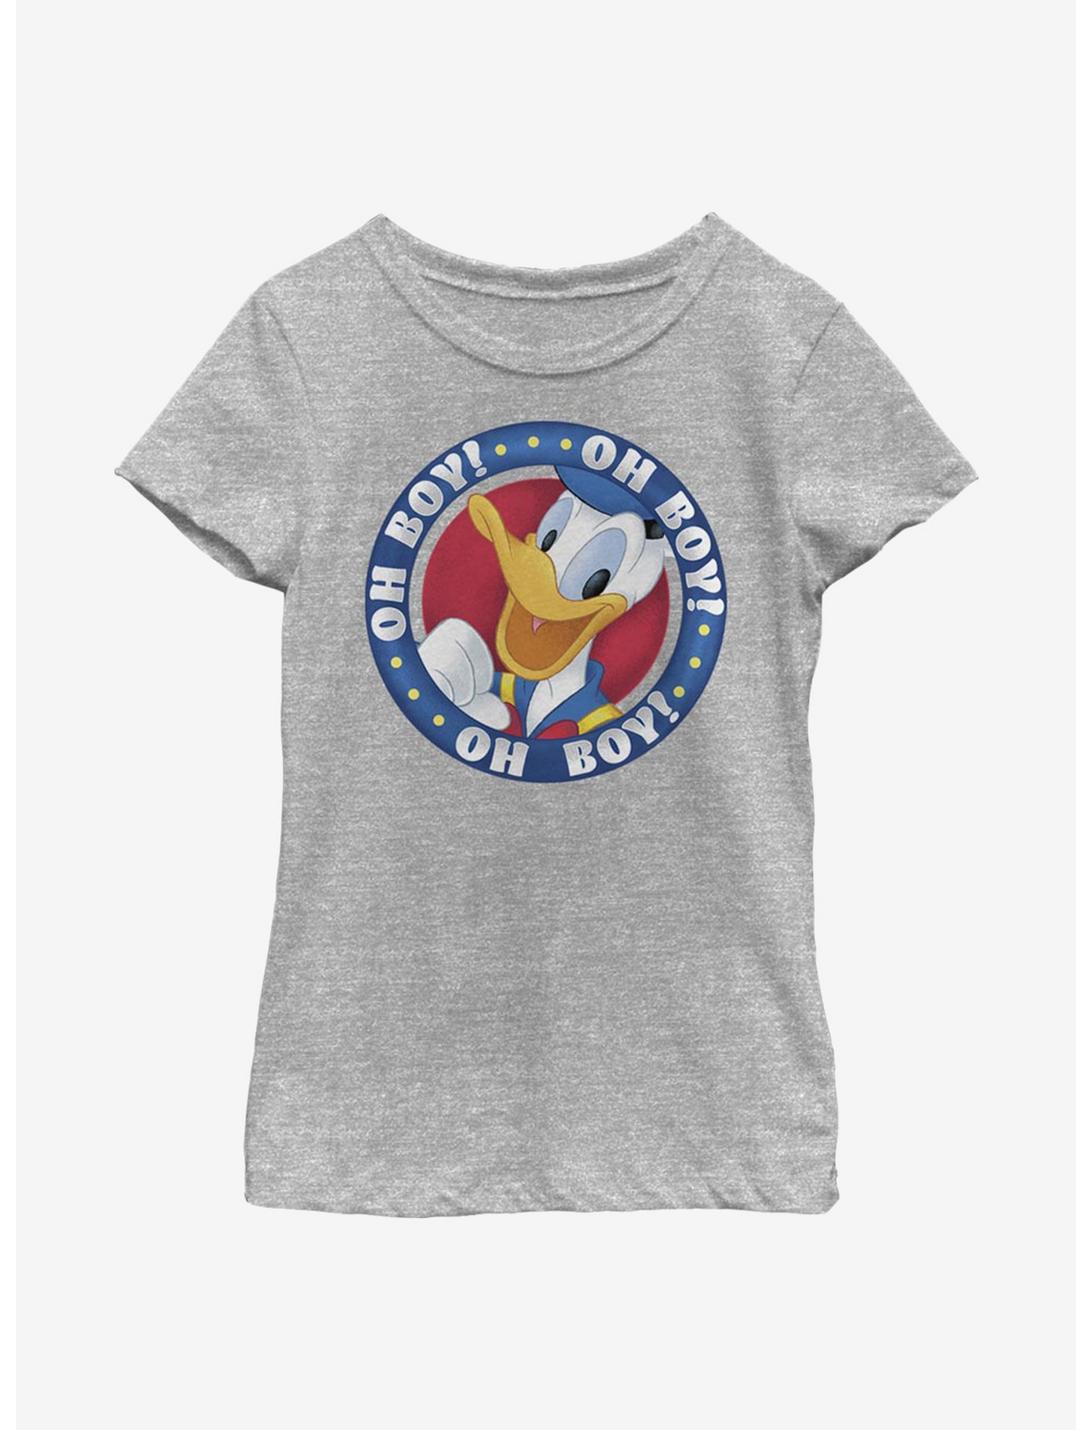 Disney Donald Duck Oh Boy Donald Youth Girls T-Shirt, ATH HTR, hi-res